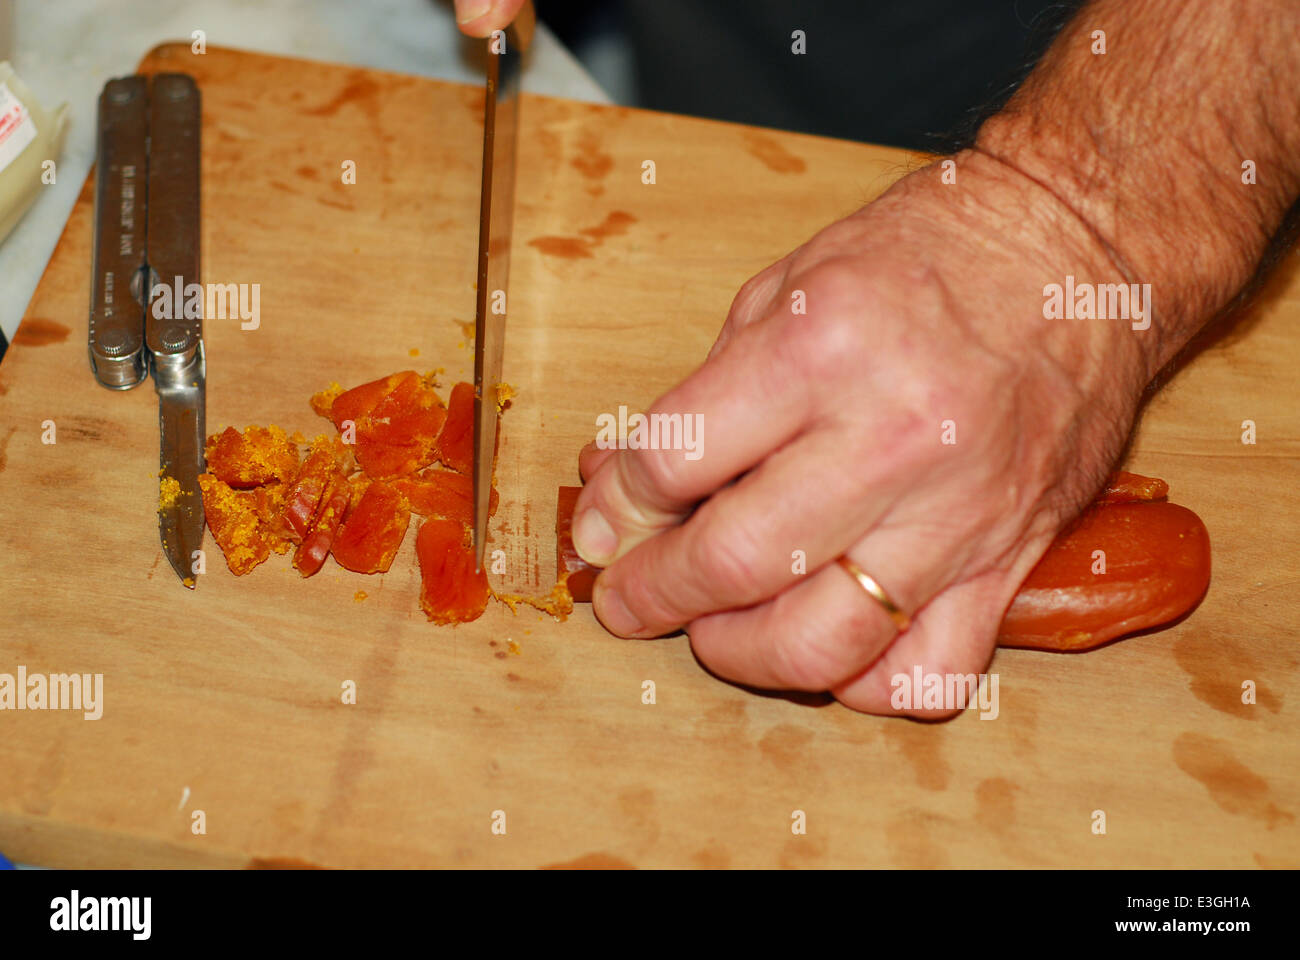 A man cutting and preparing botargo Stock Photo